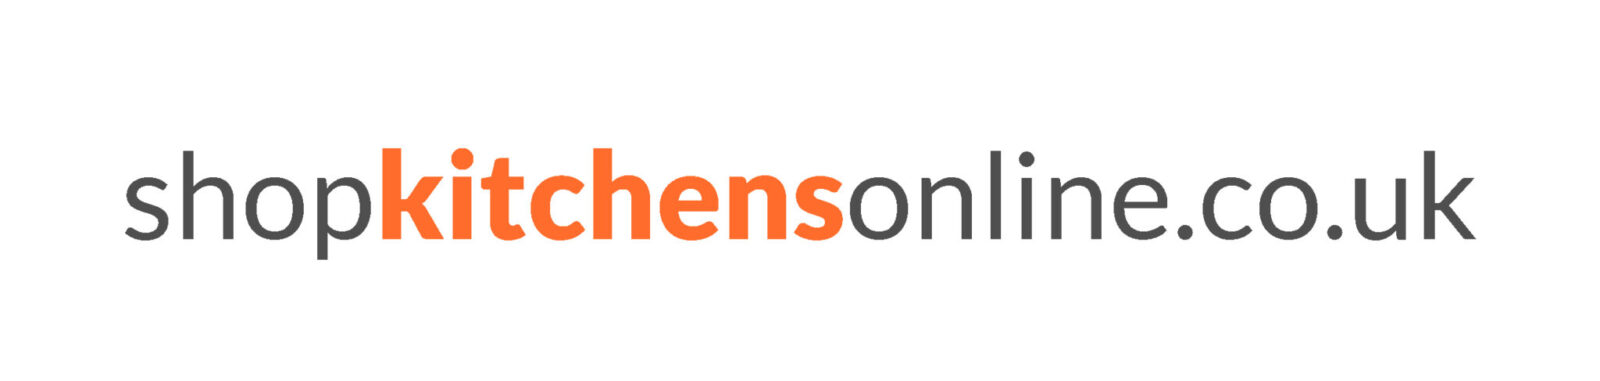 shopkitchensonline logo